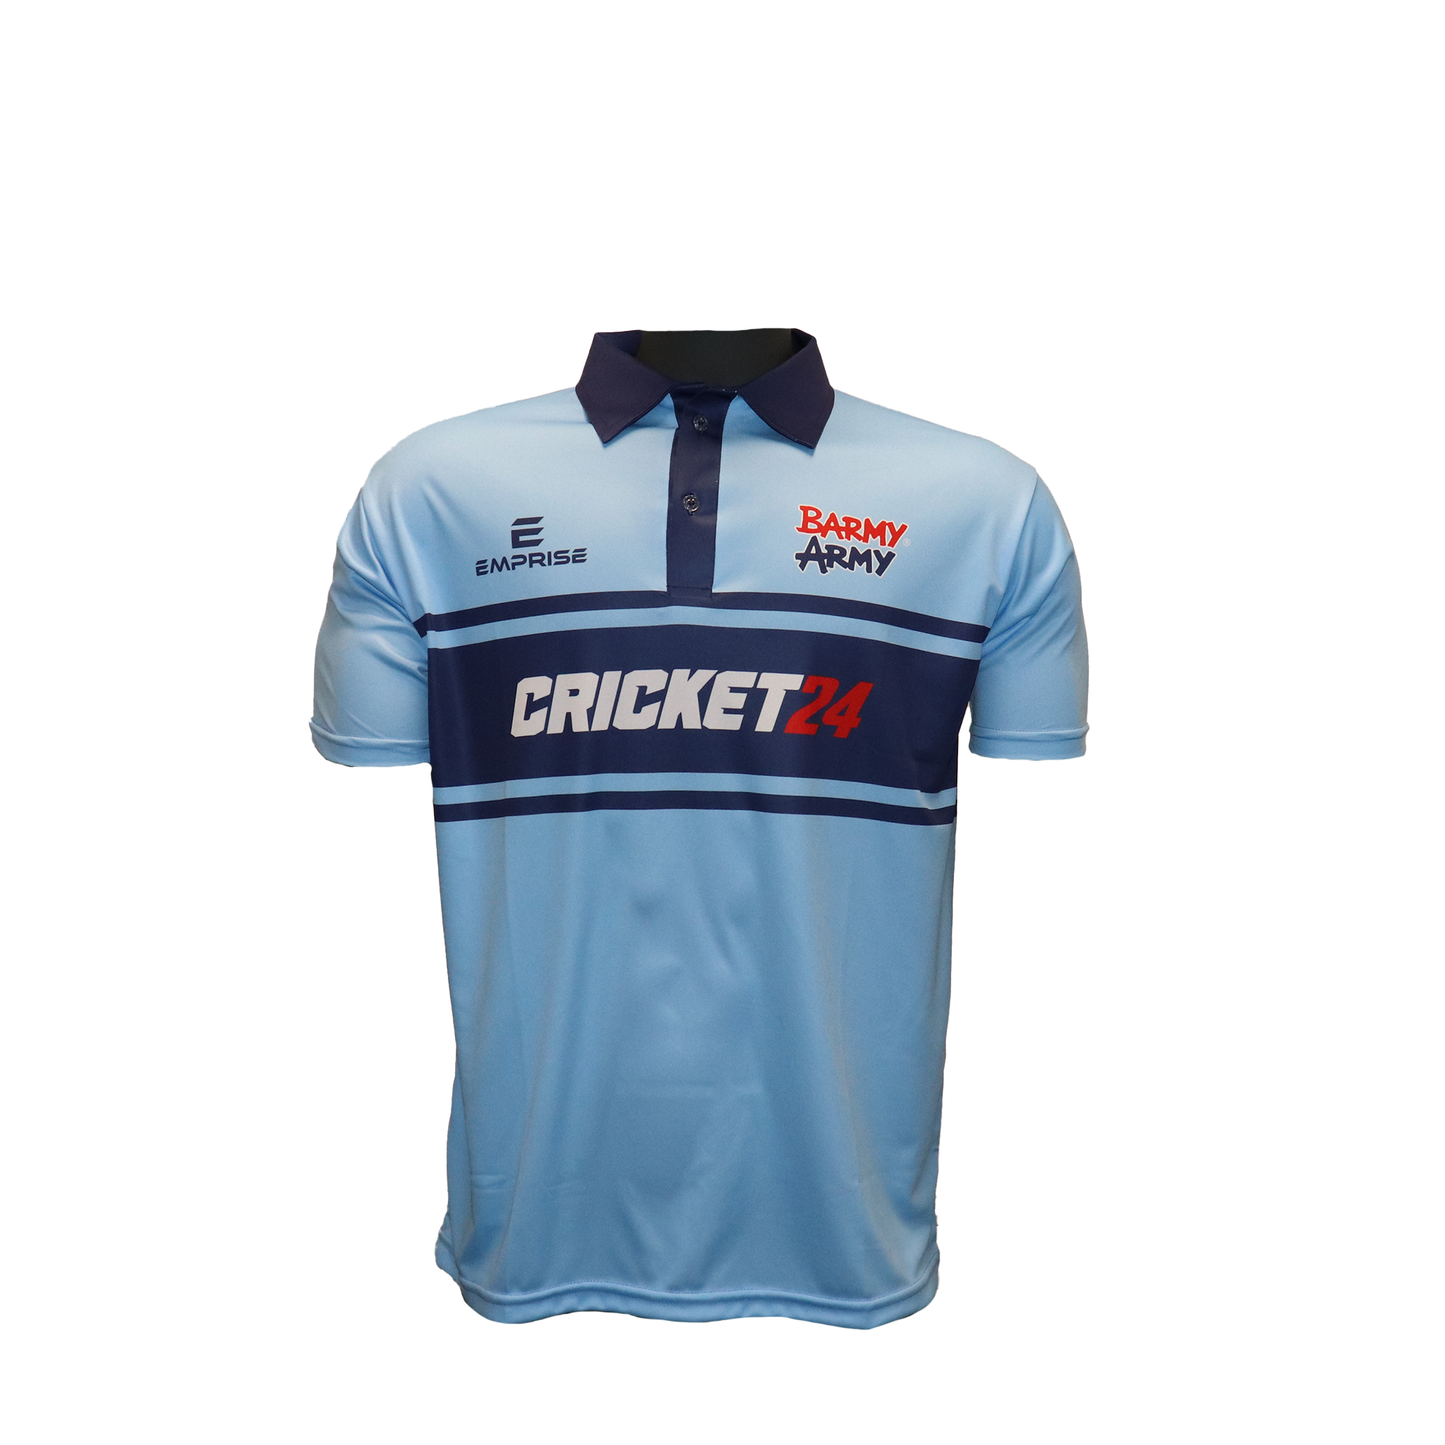 Cricket 24 x Barmy Army Cricket Shirt - Model 1